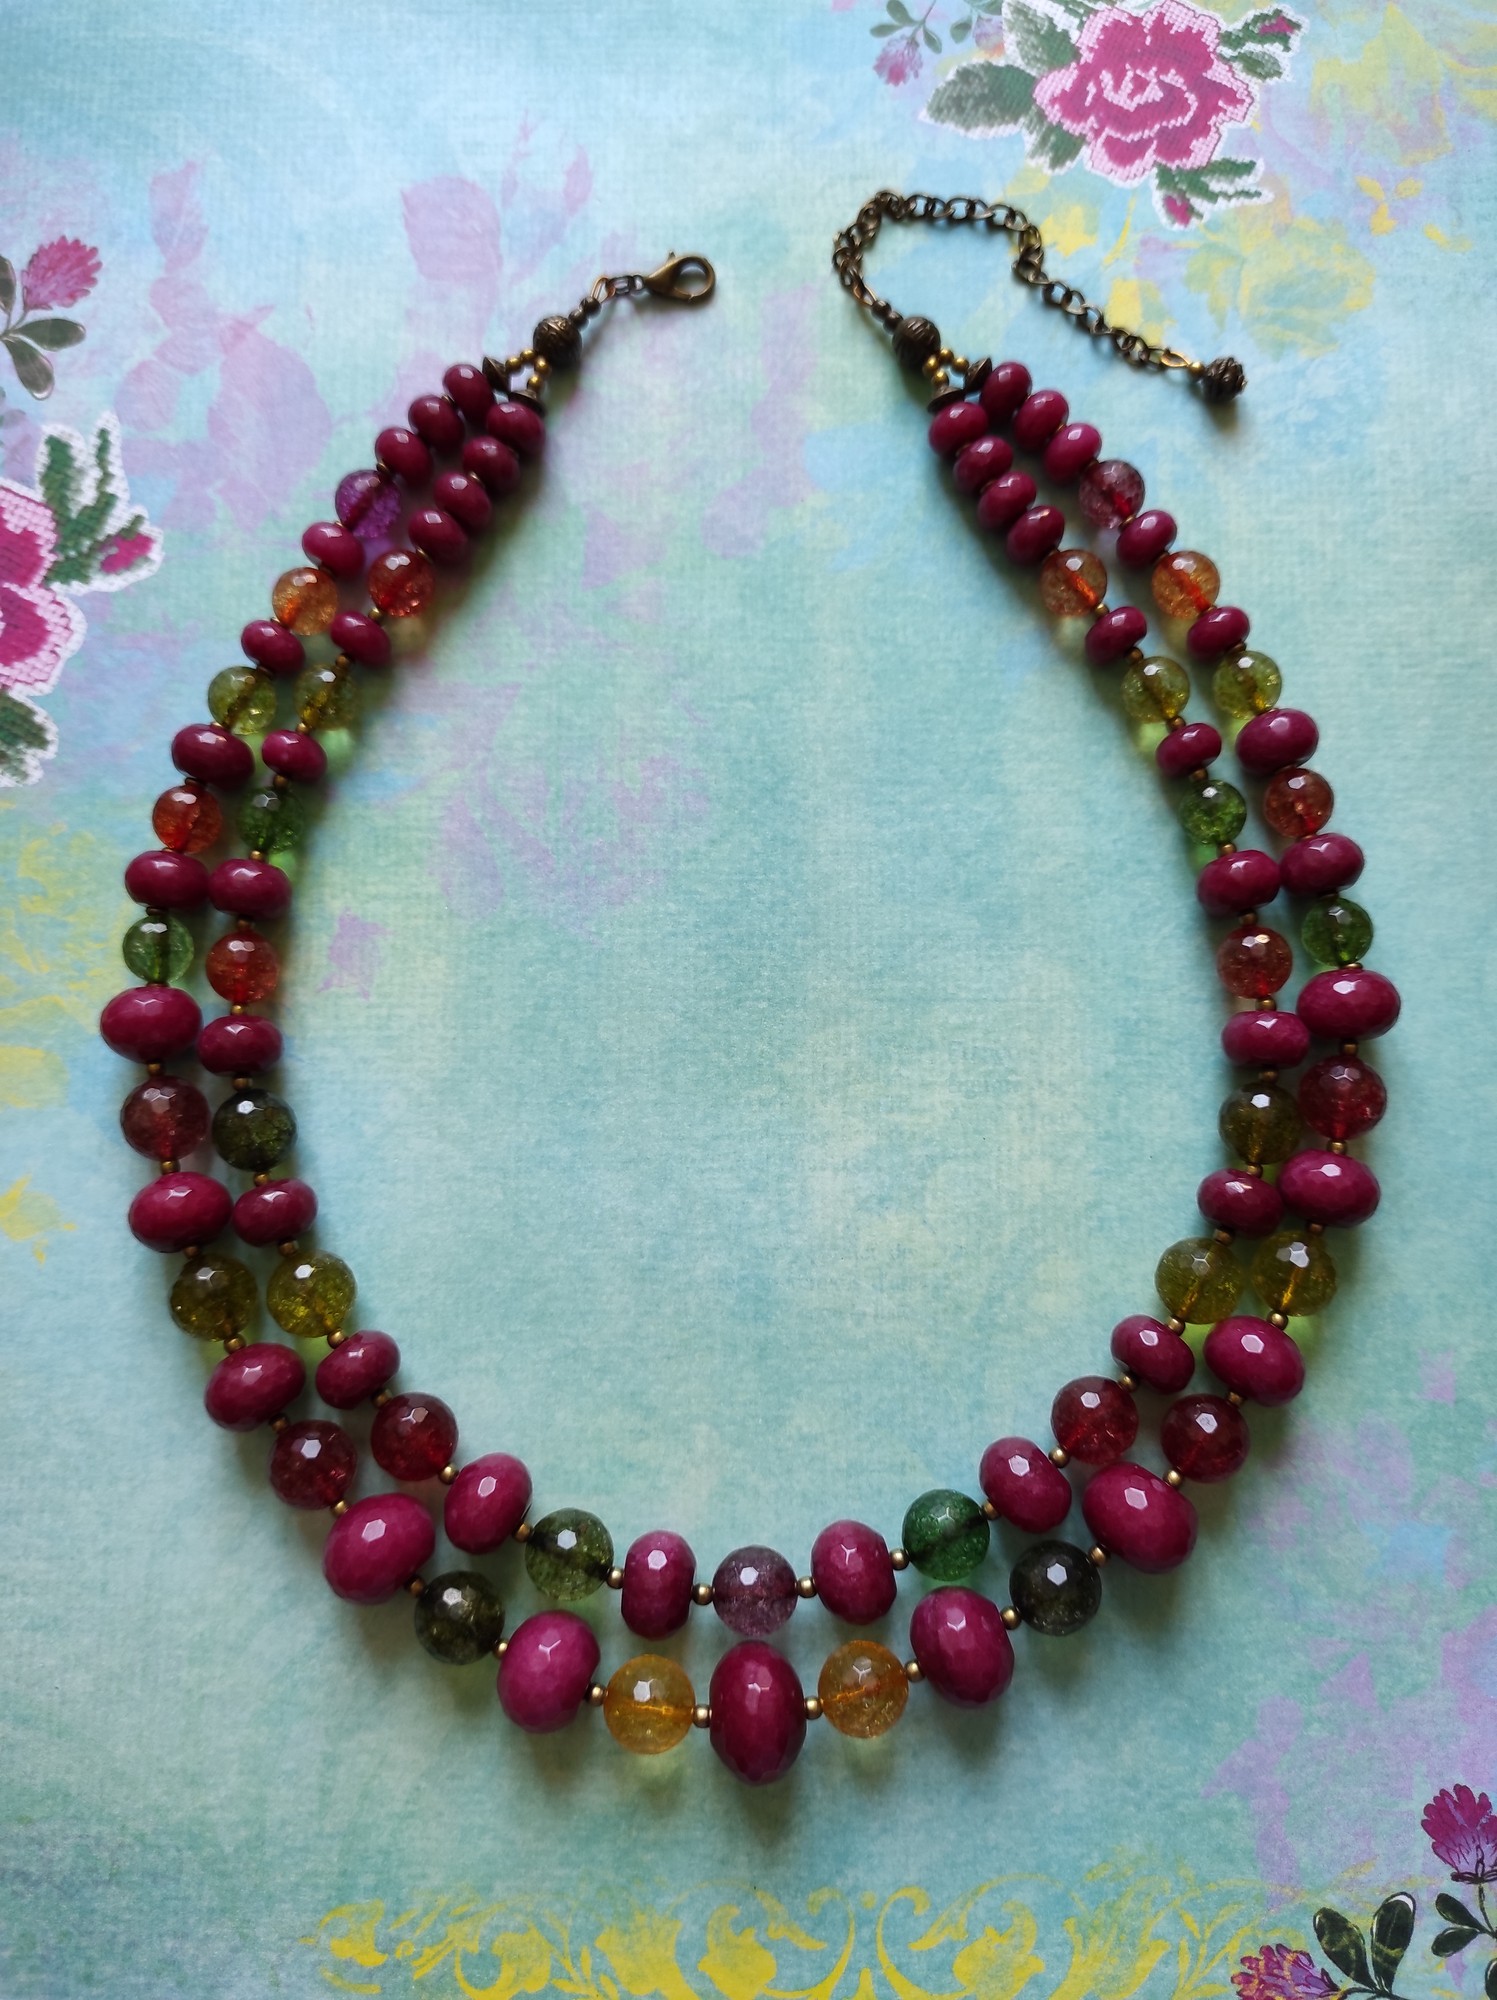 Necklace "Fruit necklace" from tourmaline and sugar quartz